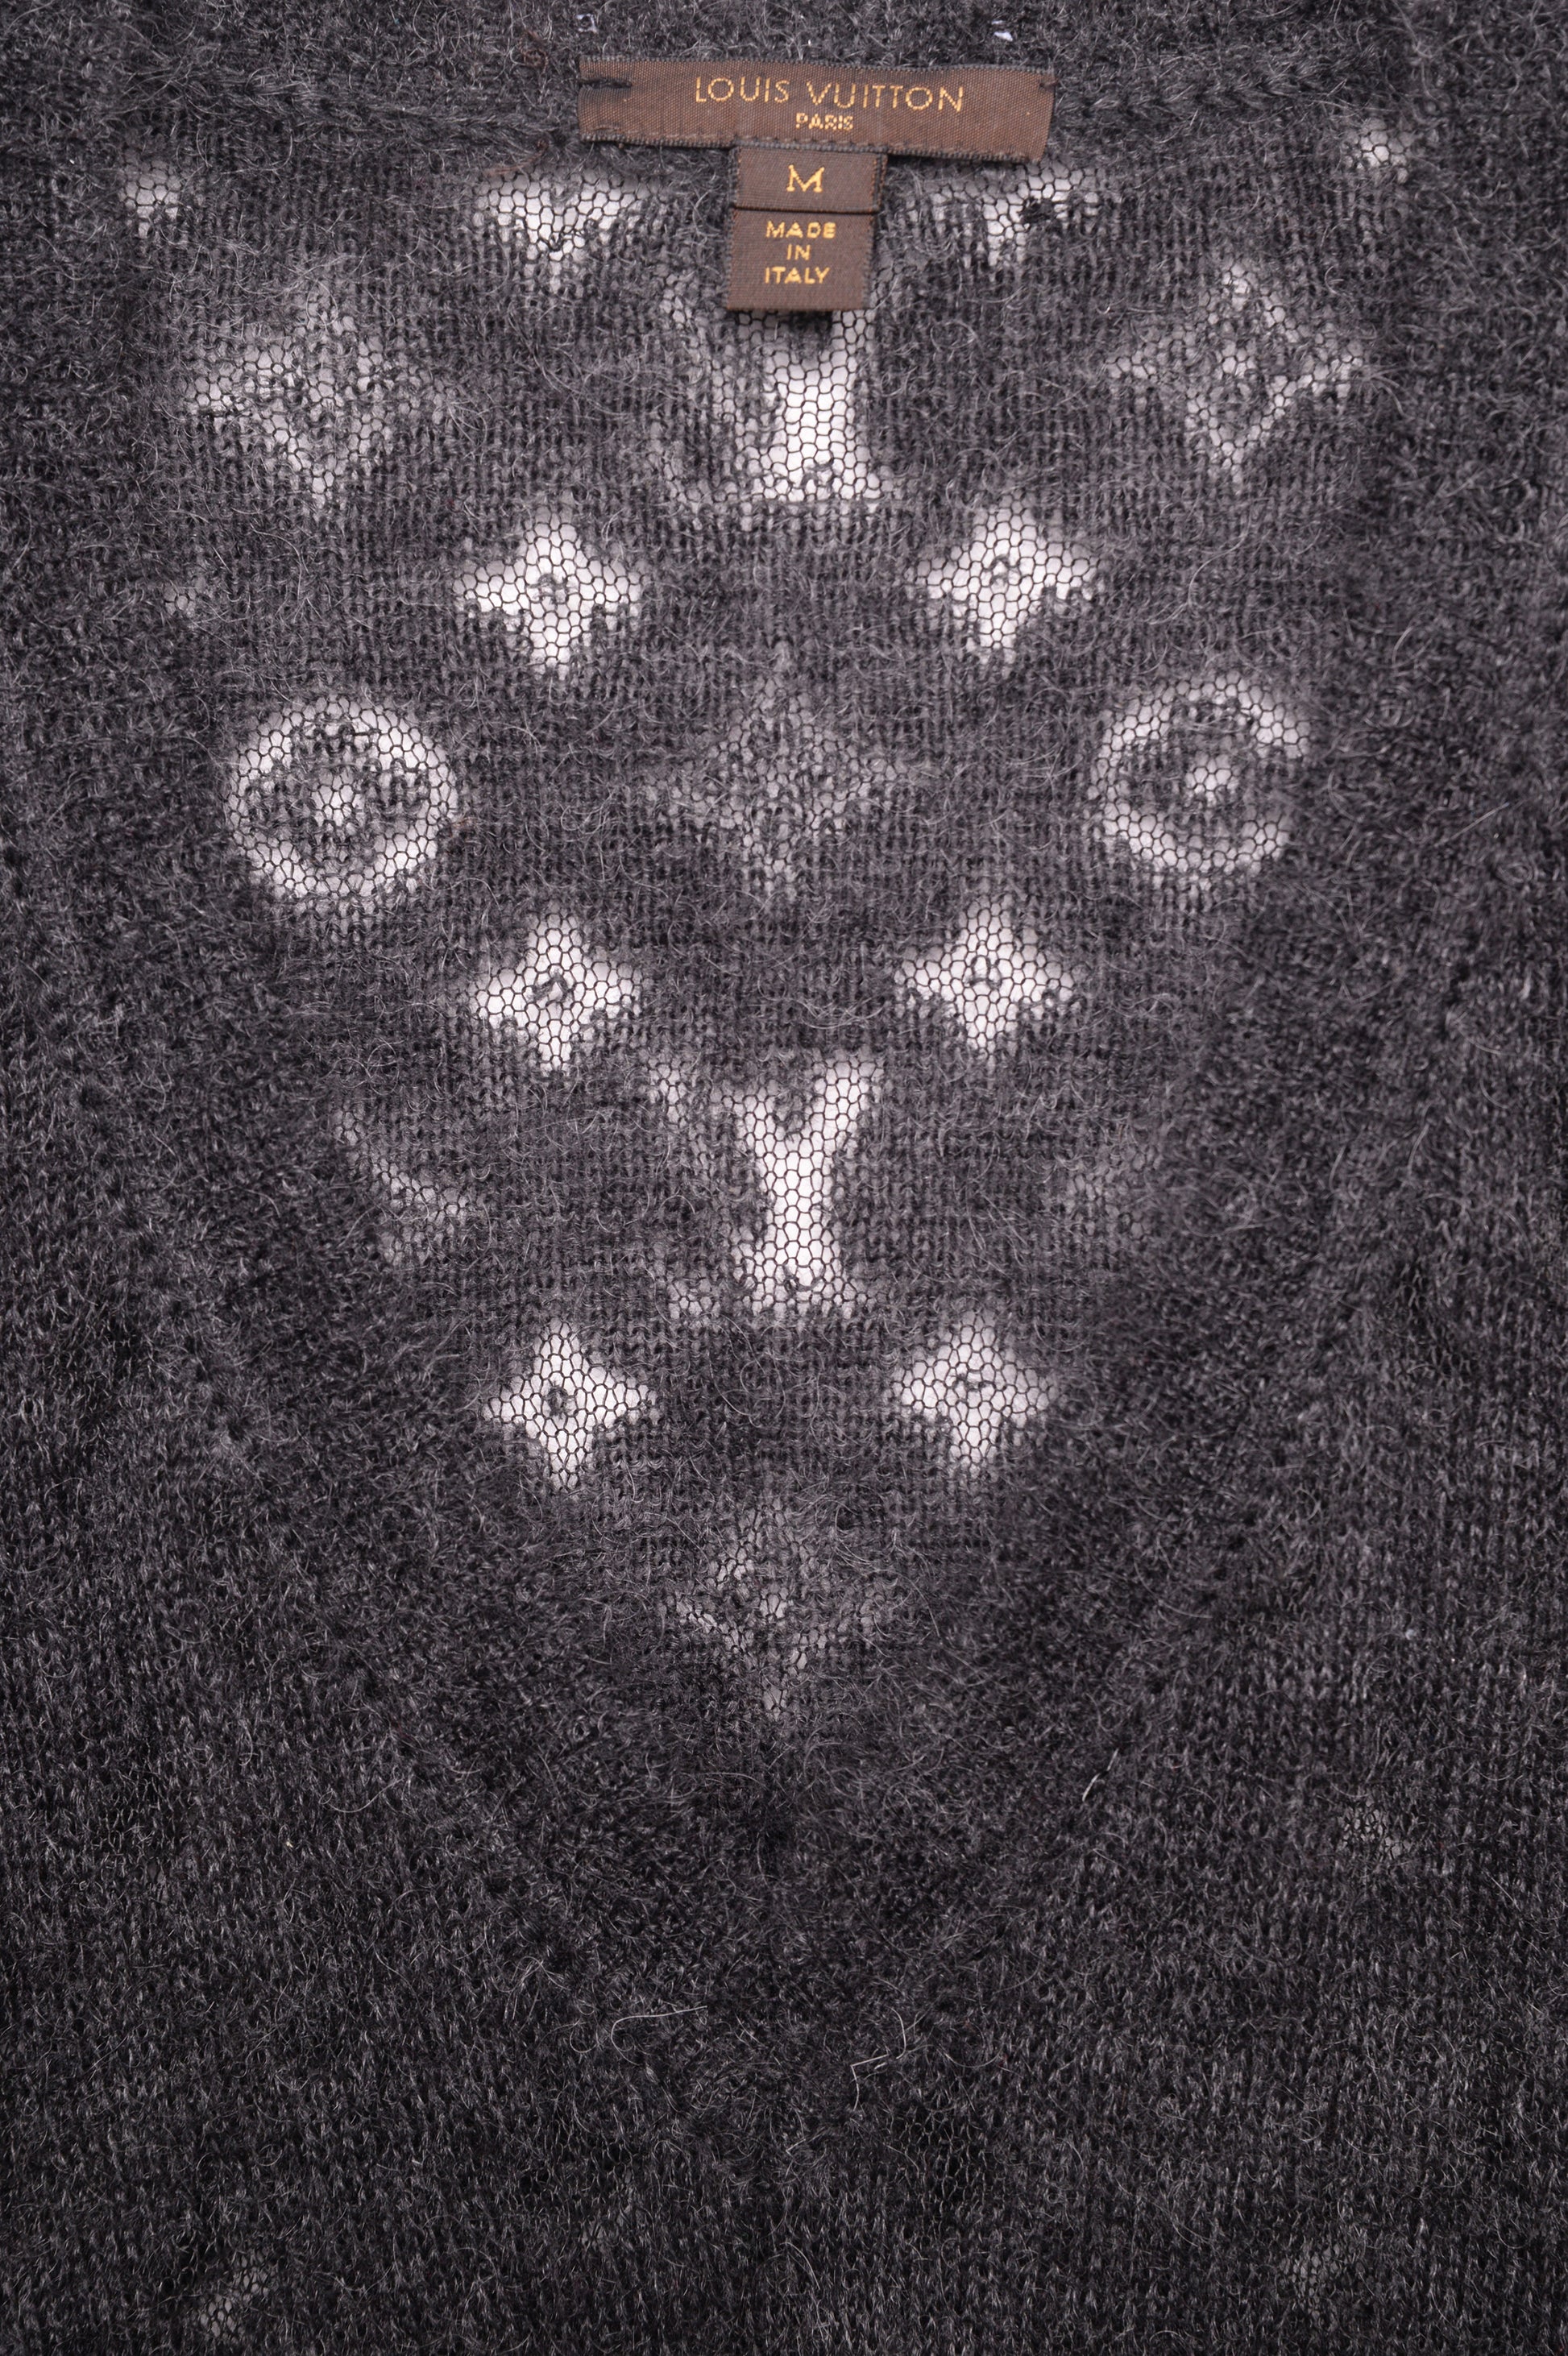 Louis Vuitton Long Knitted Coat Dark Khaki. Size S0